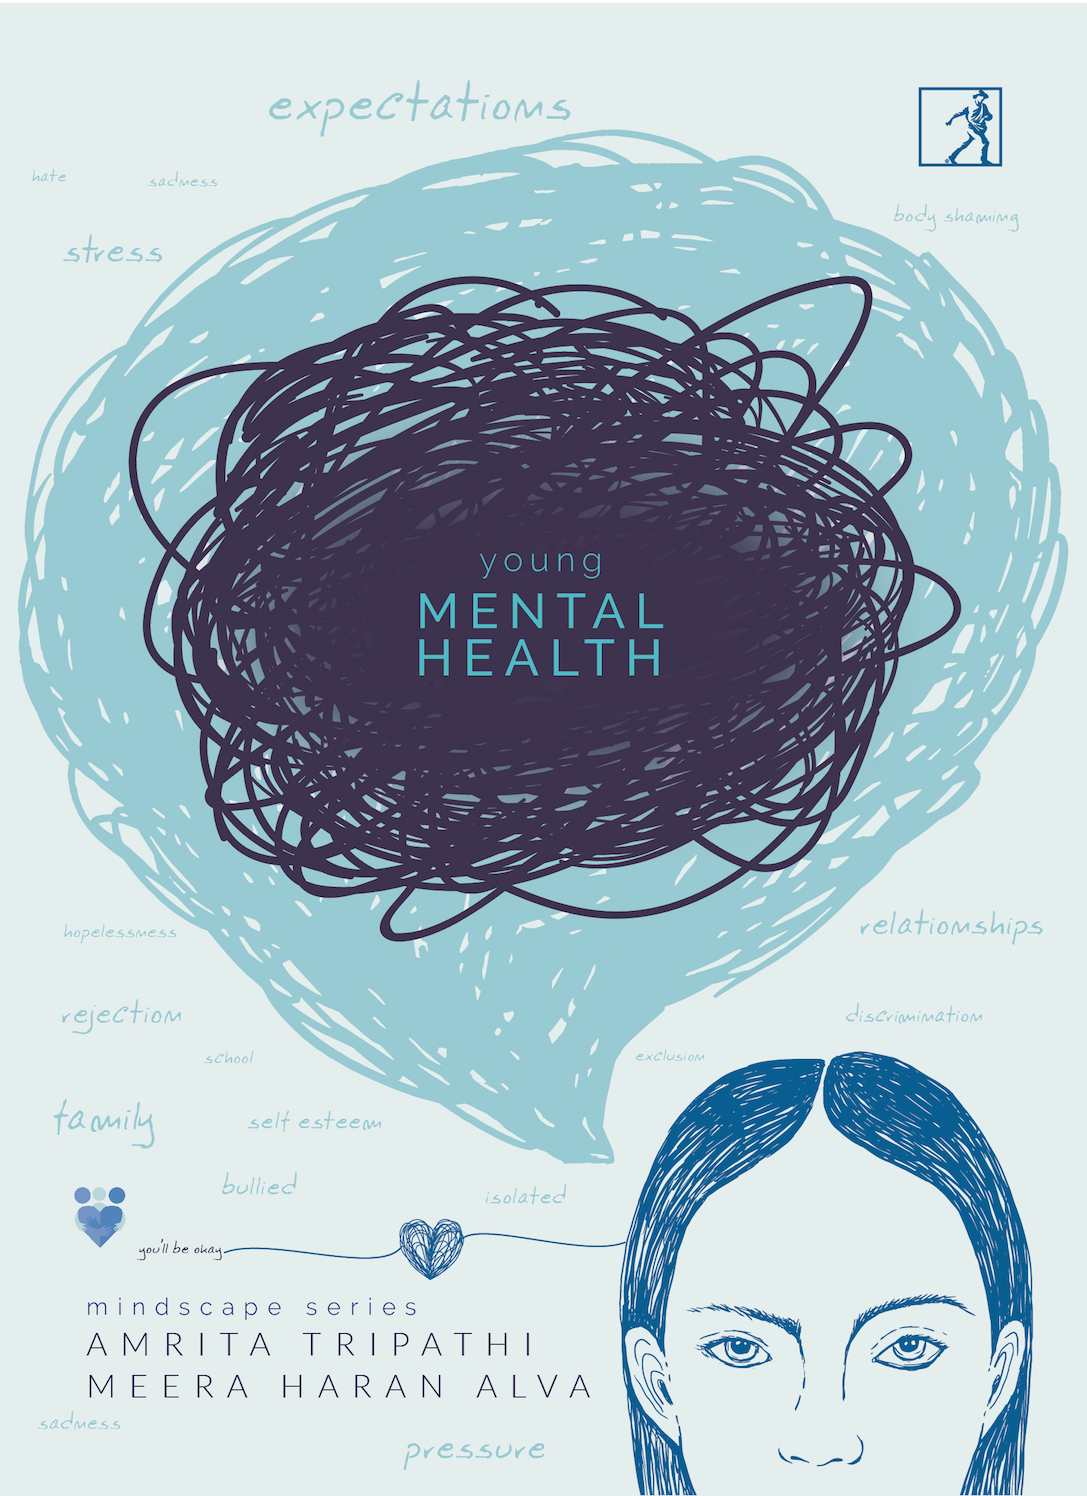 Young Mental Health by Amrita Tripathi and Meera Haran Alva